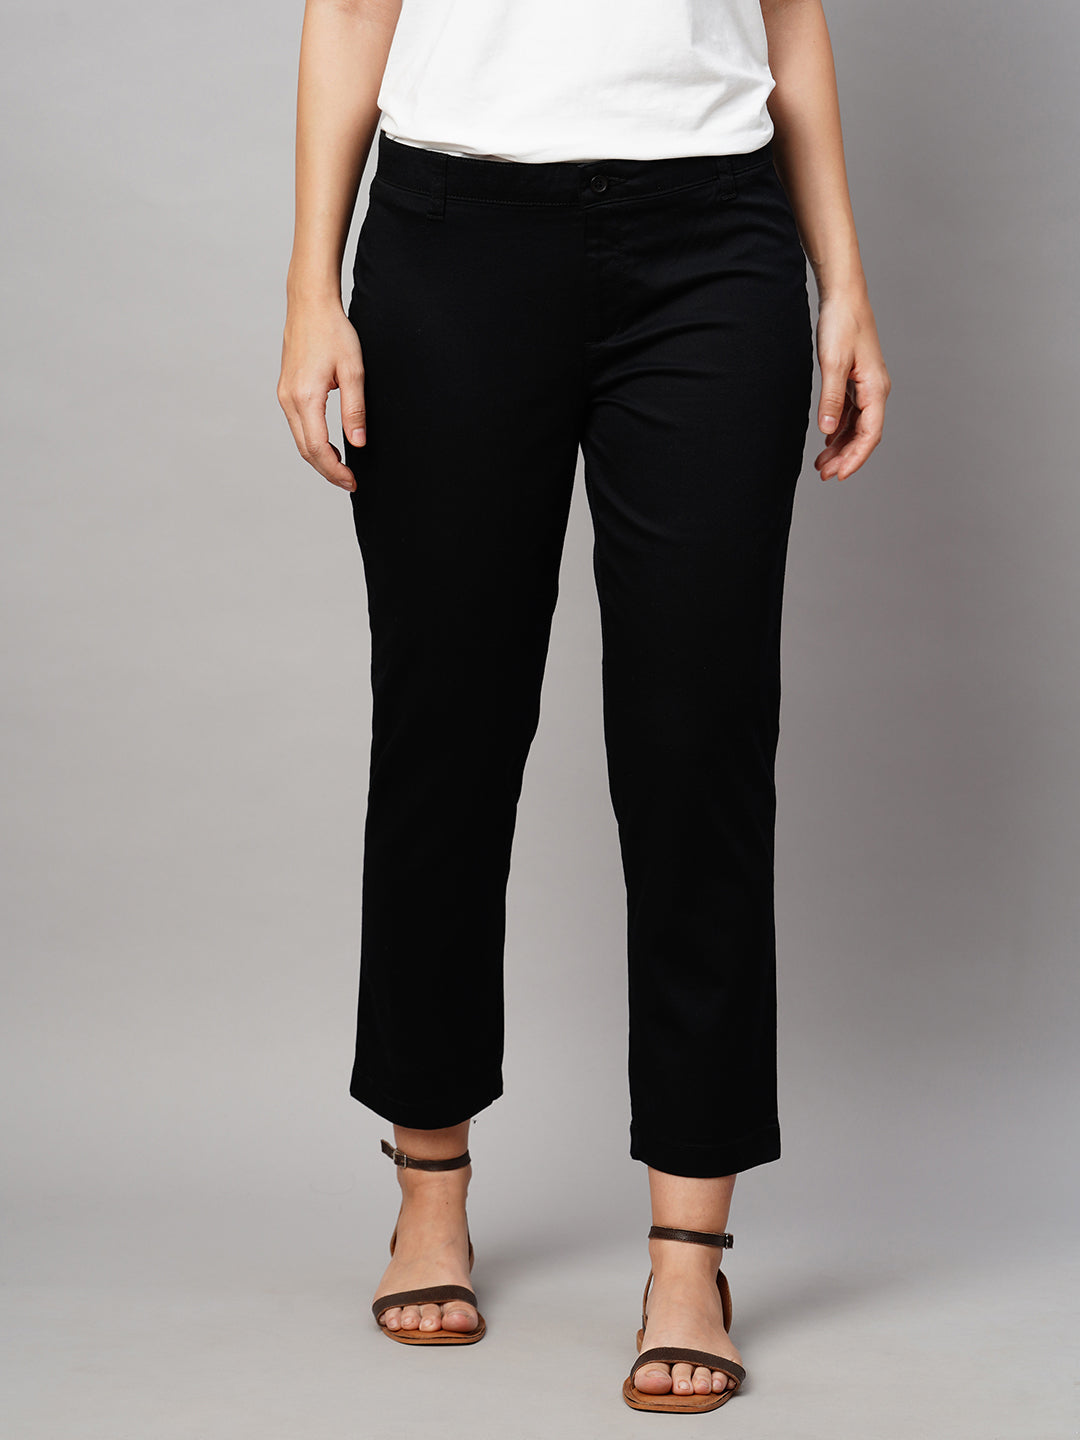 Women's Black Cotton Lycra Regular Fit Pant